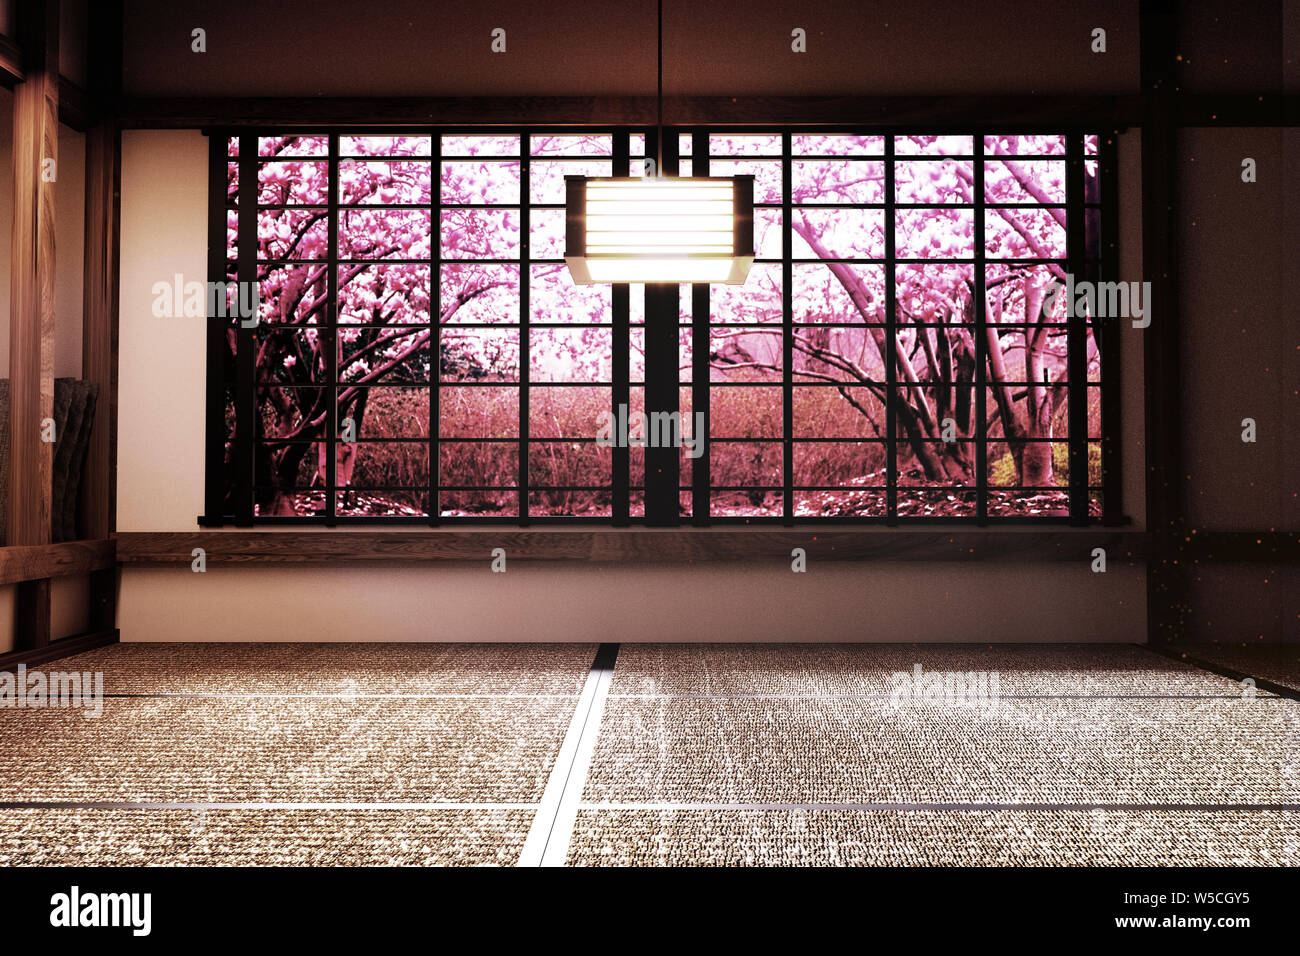 Original Design - Room interior with window view Sakura tree,Japanese zen style. 3D rendering Stock Photo